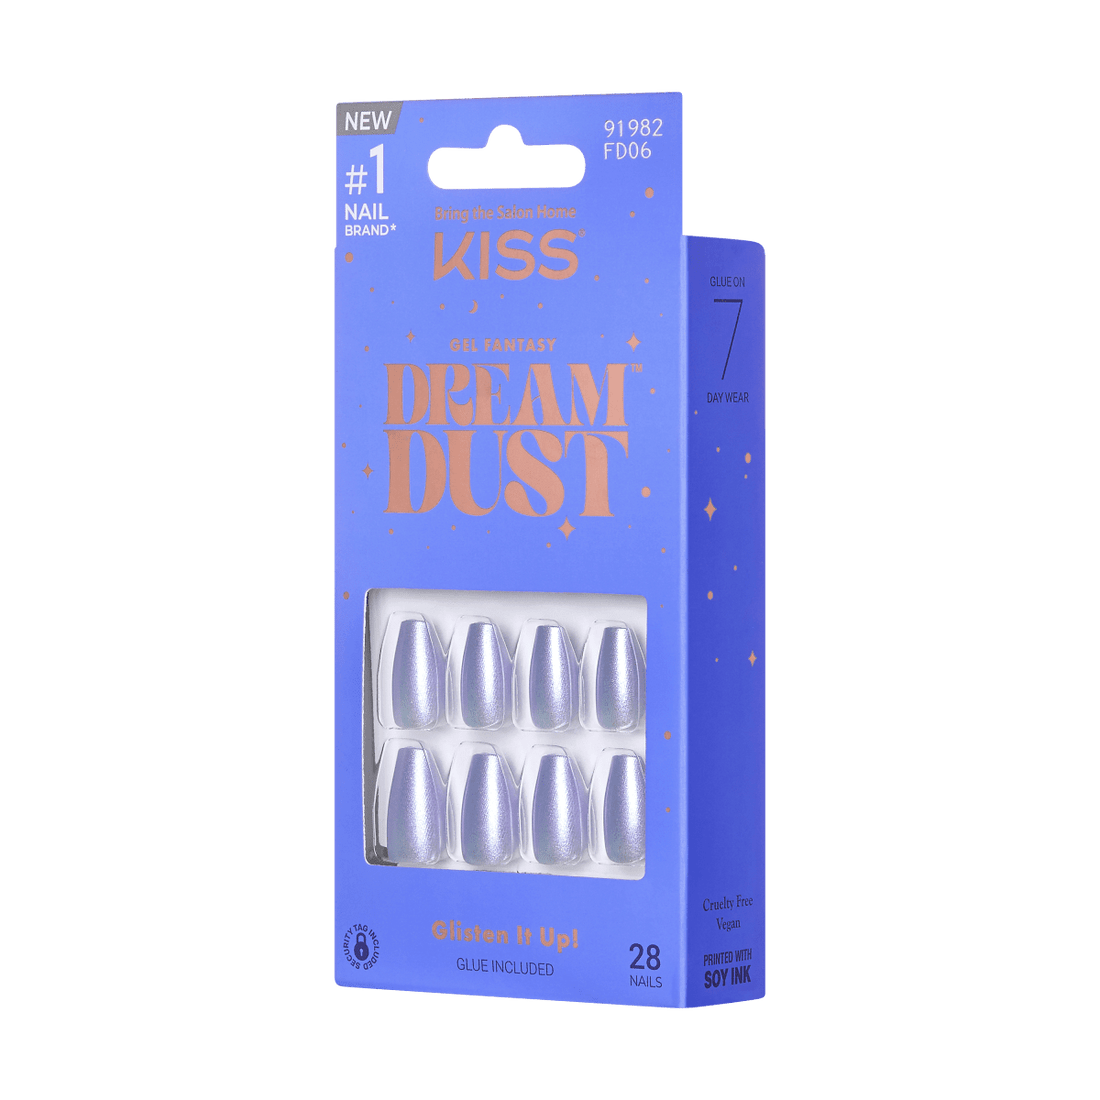 KISS Gel Fantasy Dreamdust, Press-On Nails, Diamond Life, Blue, Short Coffin, 28ct